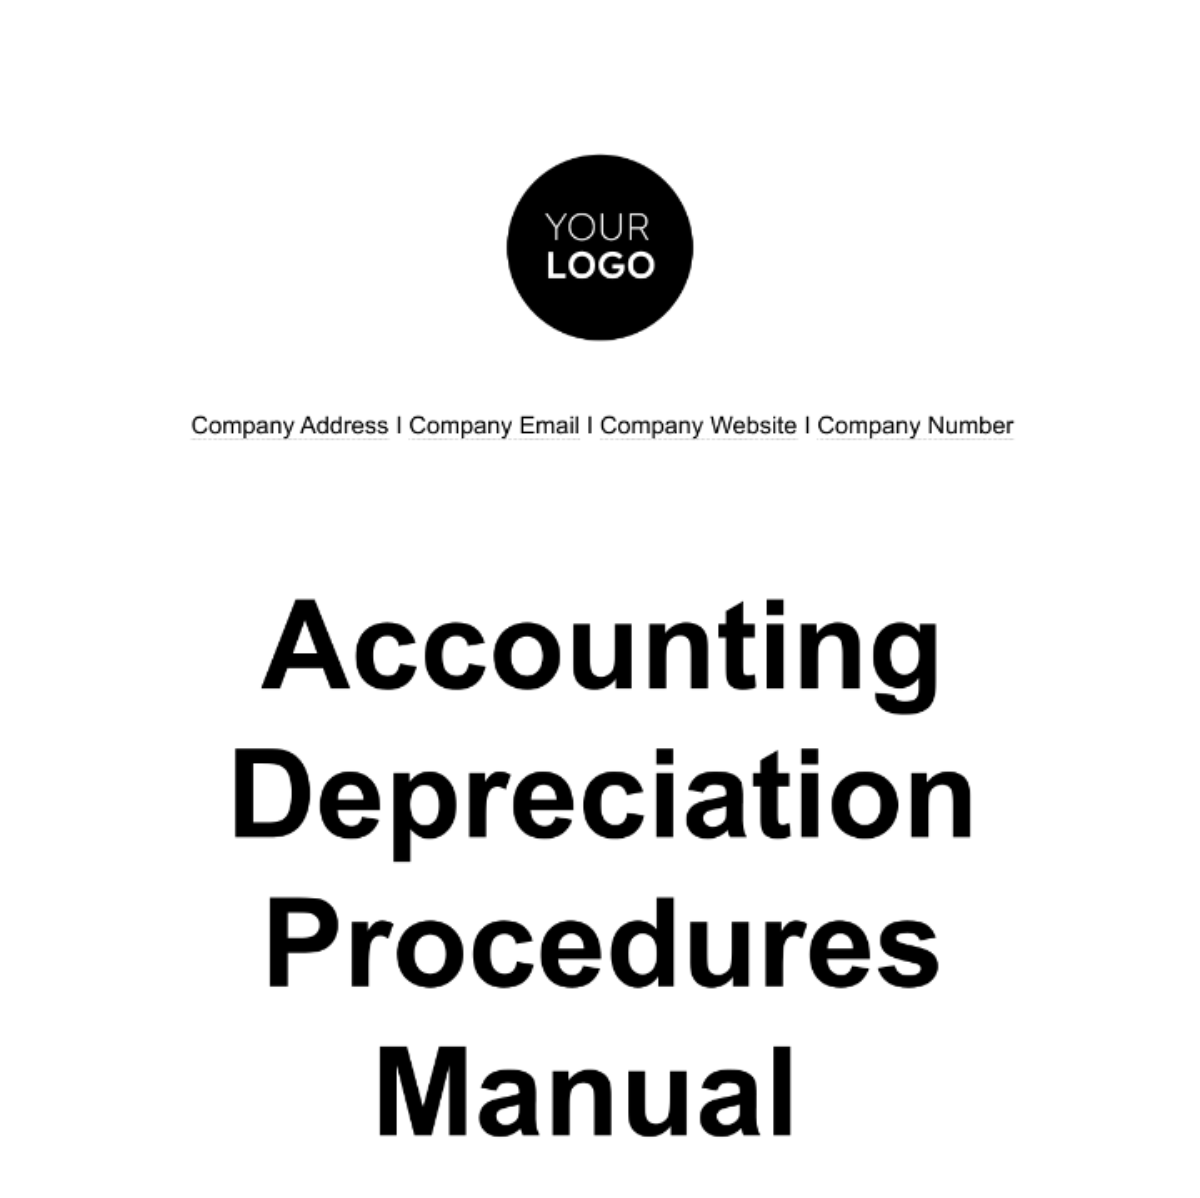 Accounting Depreciation Procedures Manual Template